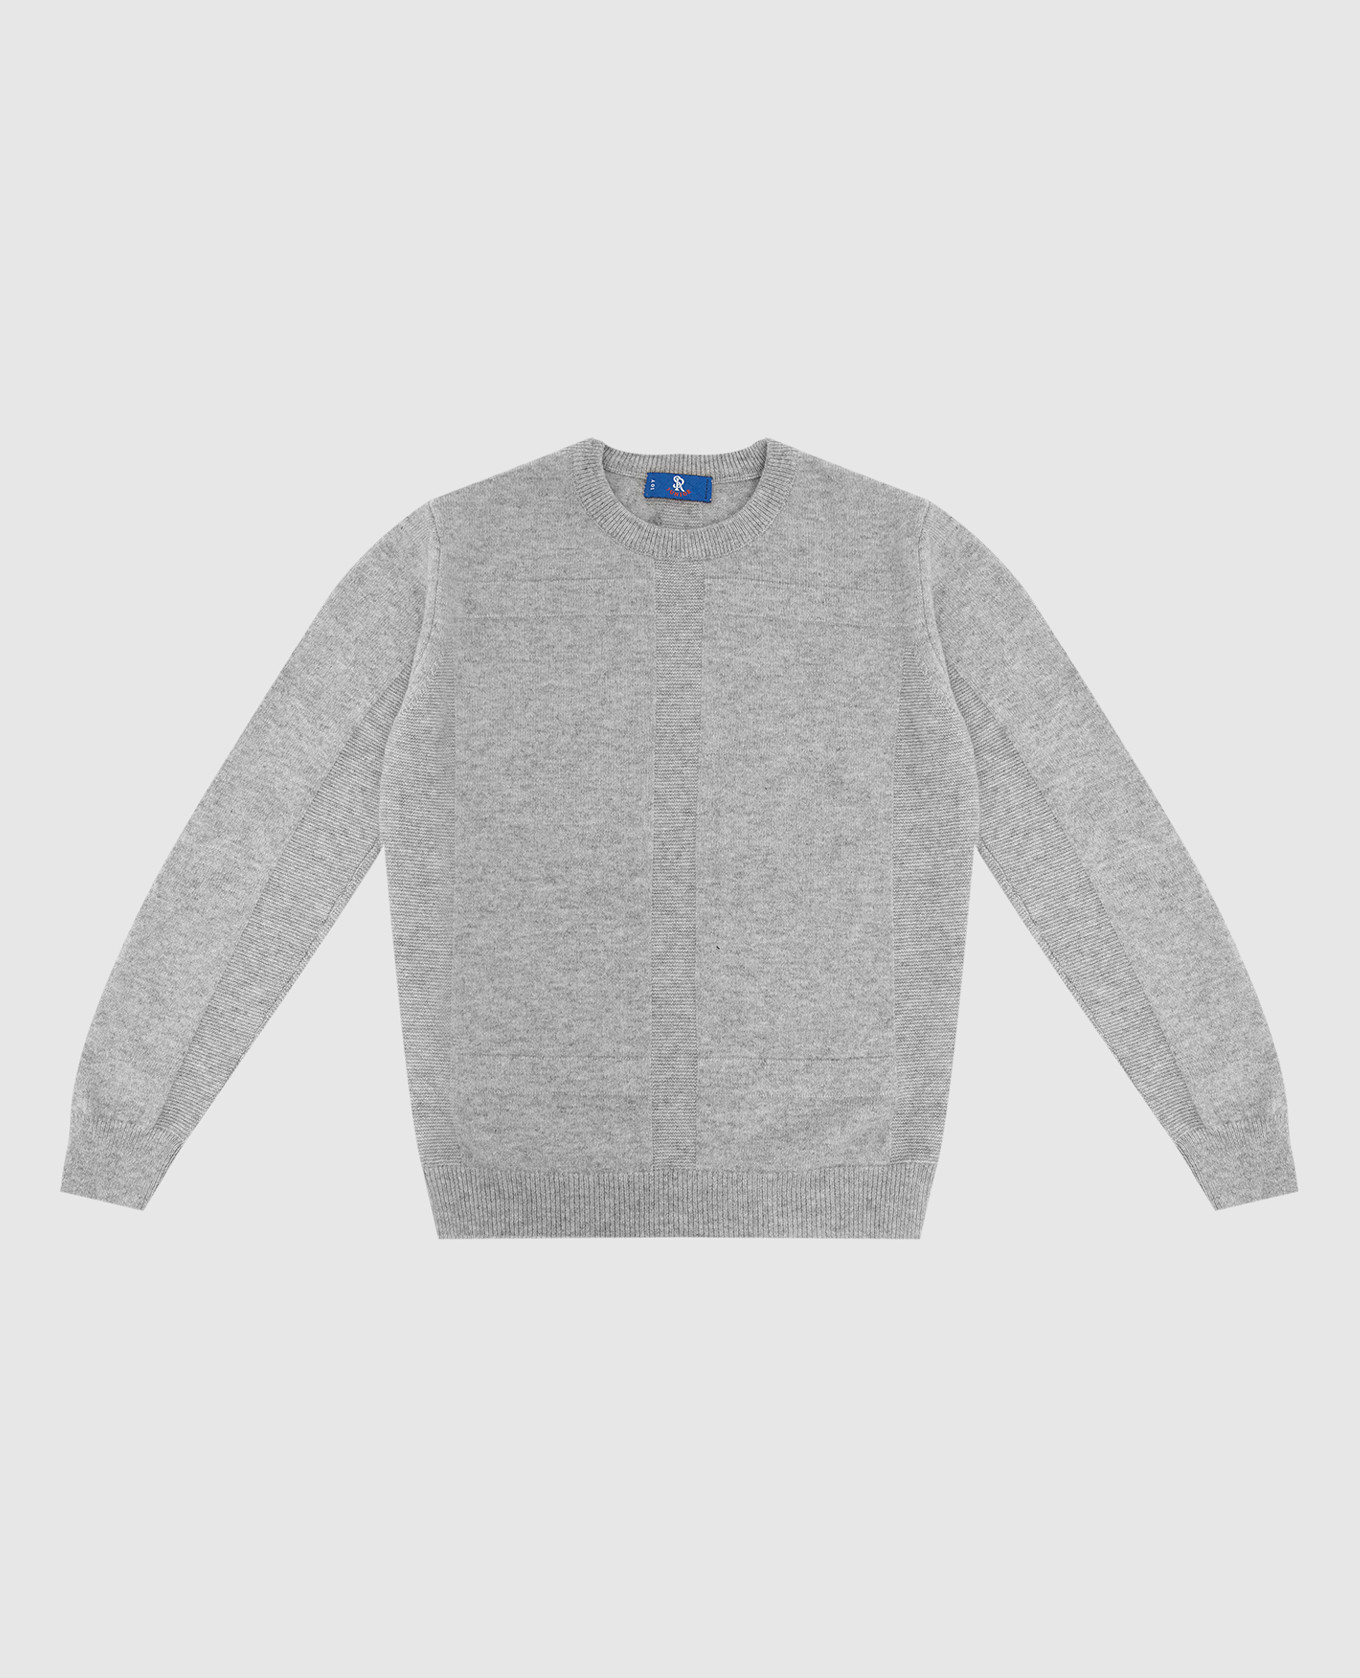 Children's light gray cashmere sweater